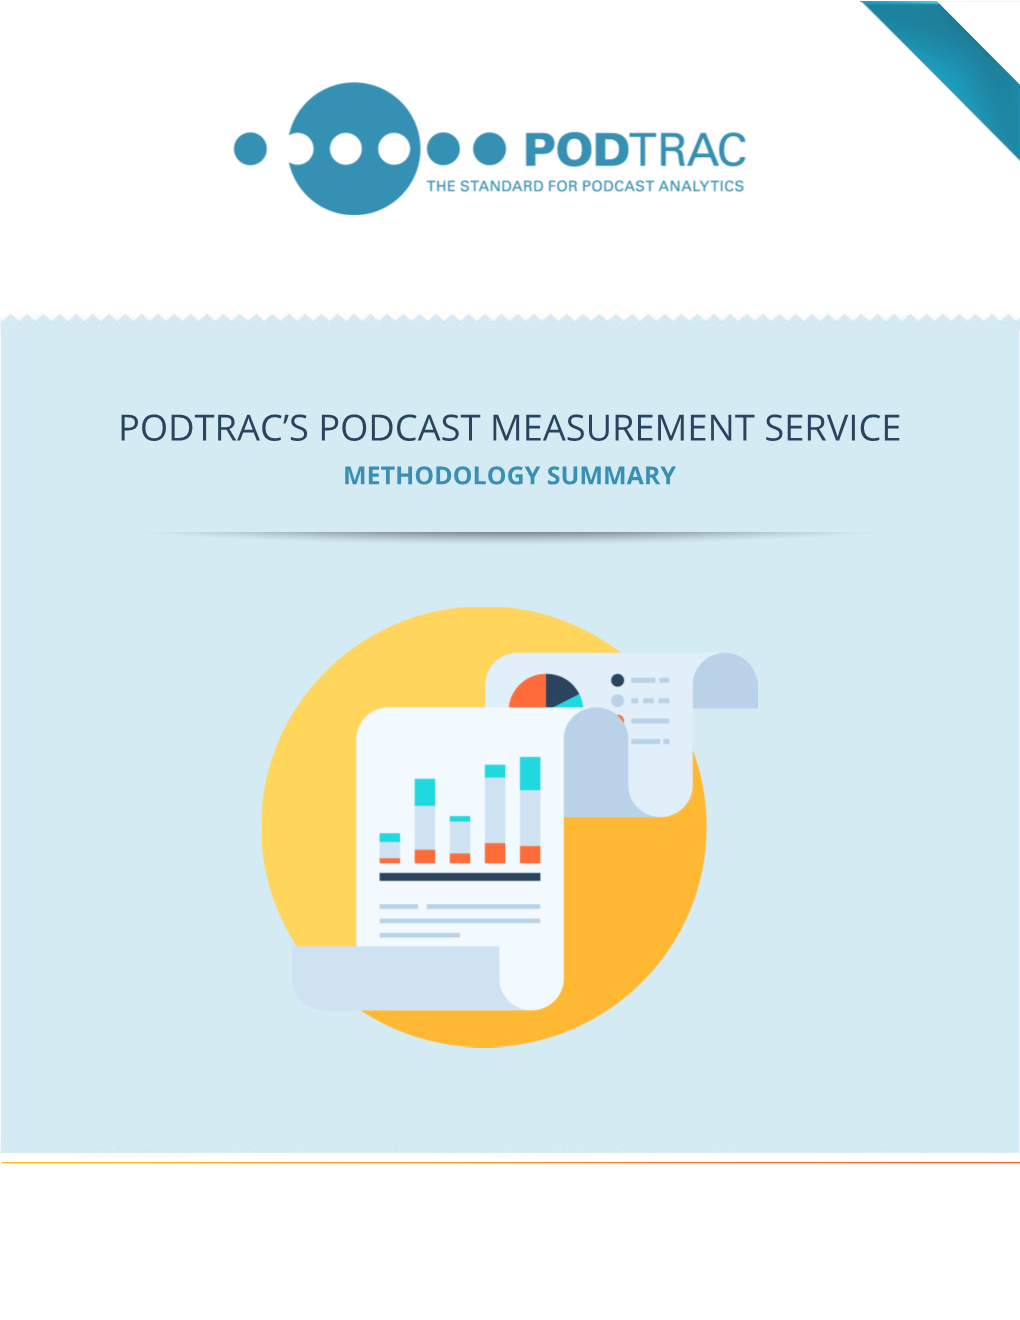 Podtrac's Podcast Measurement Service